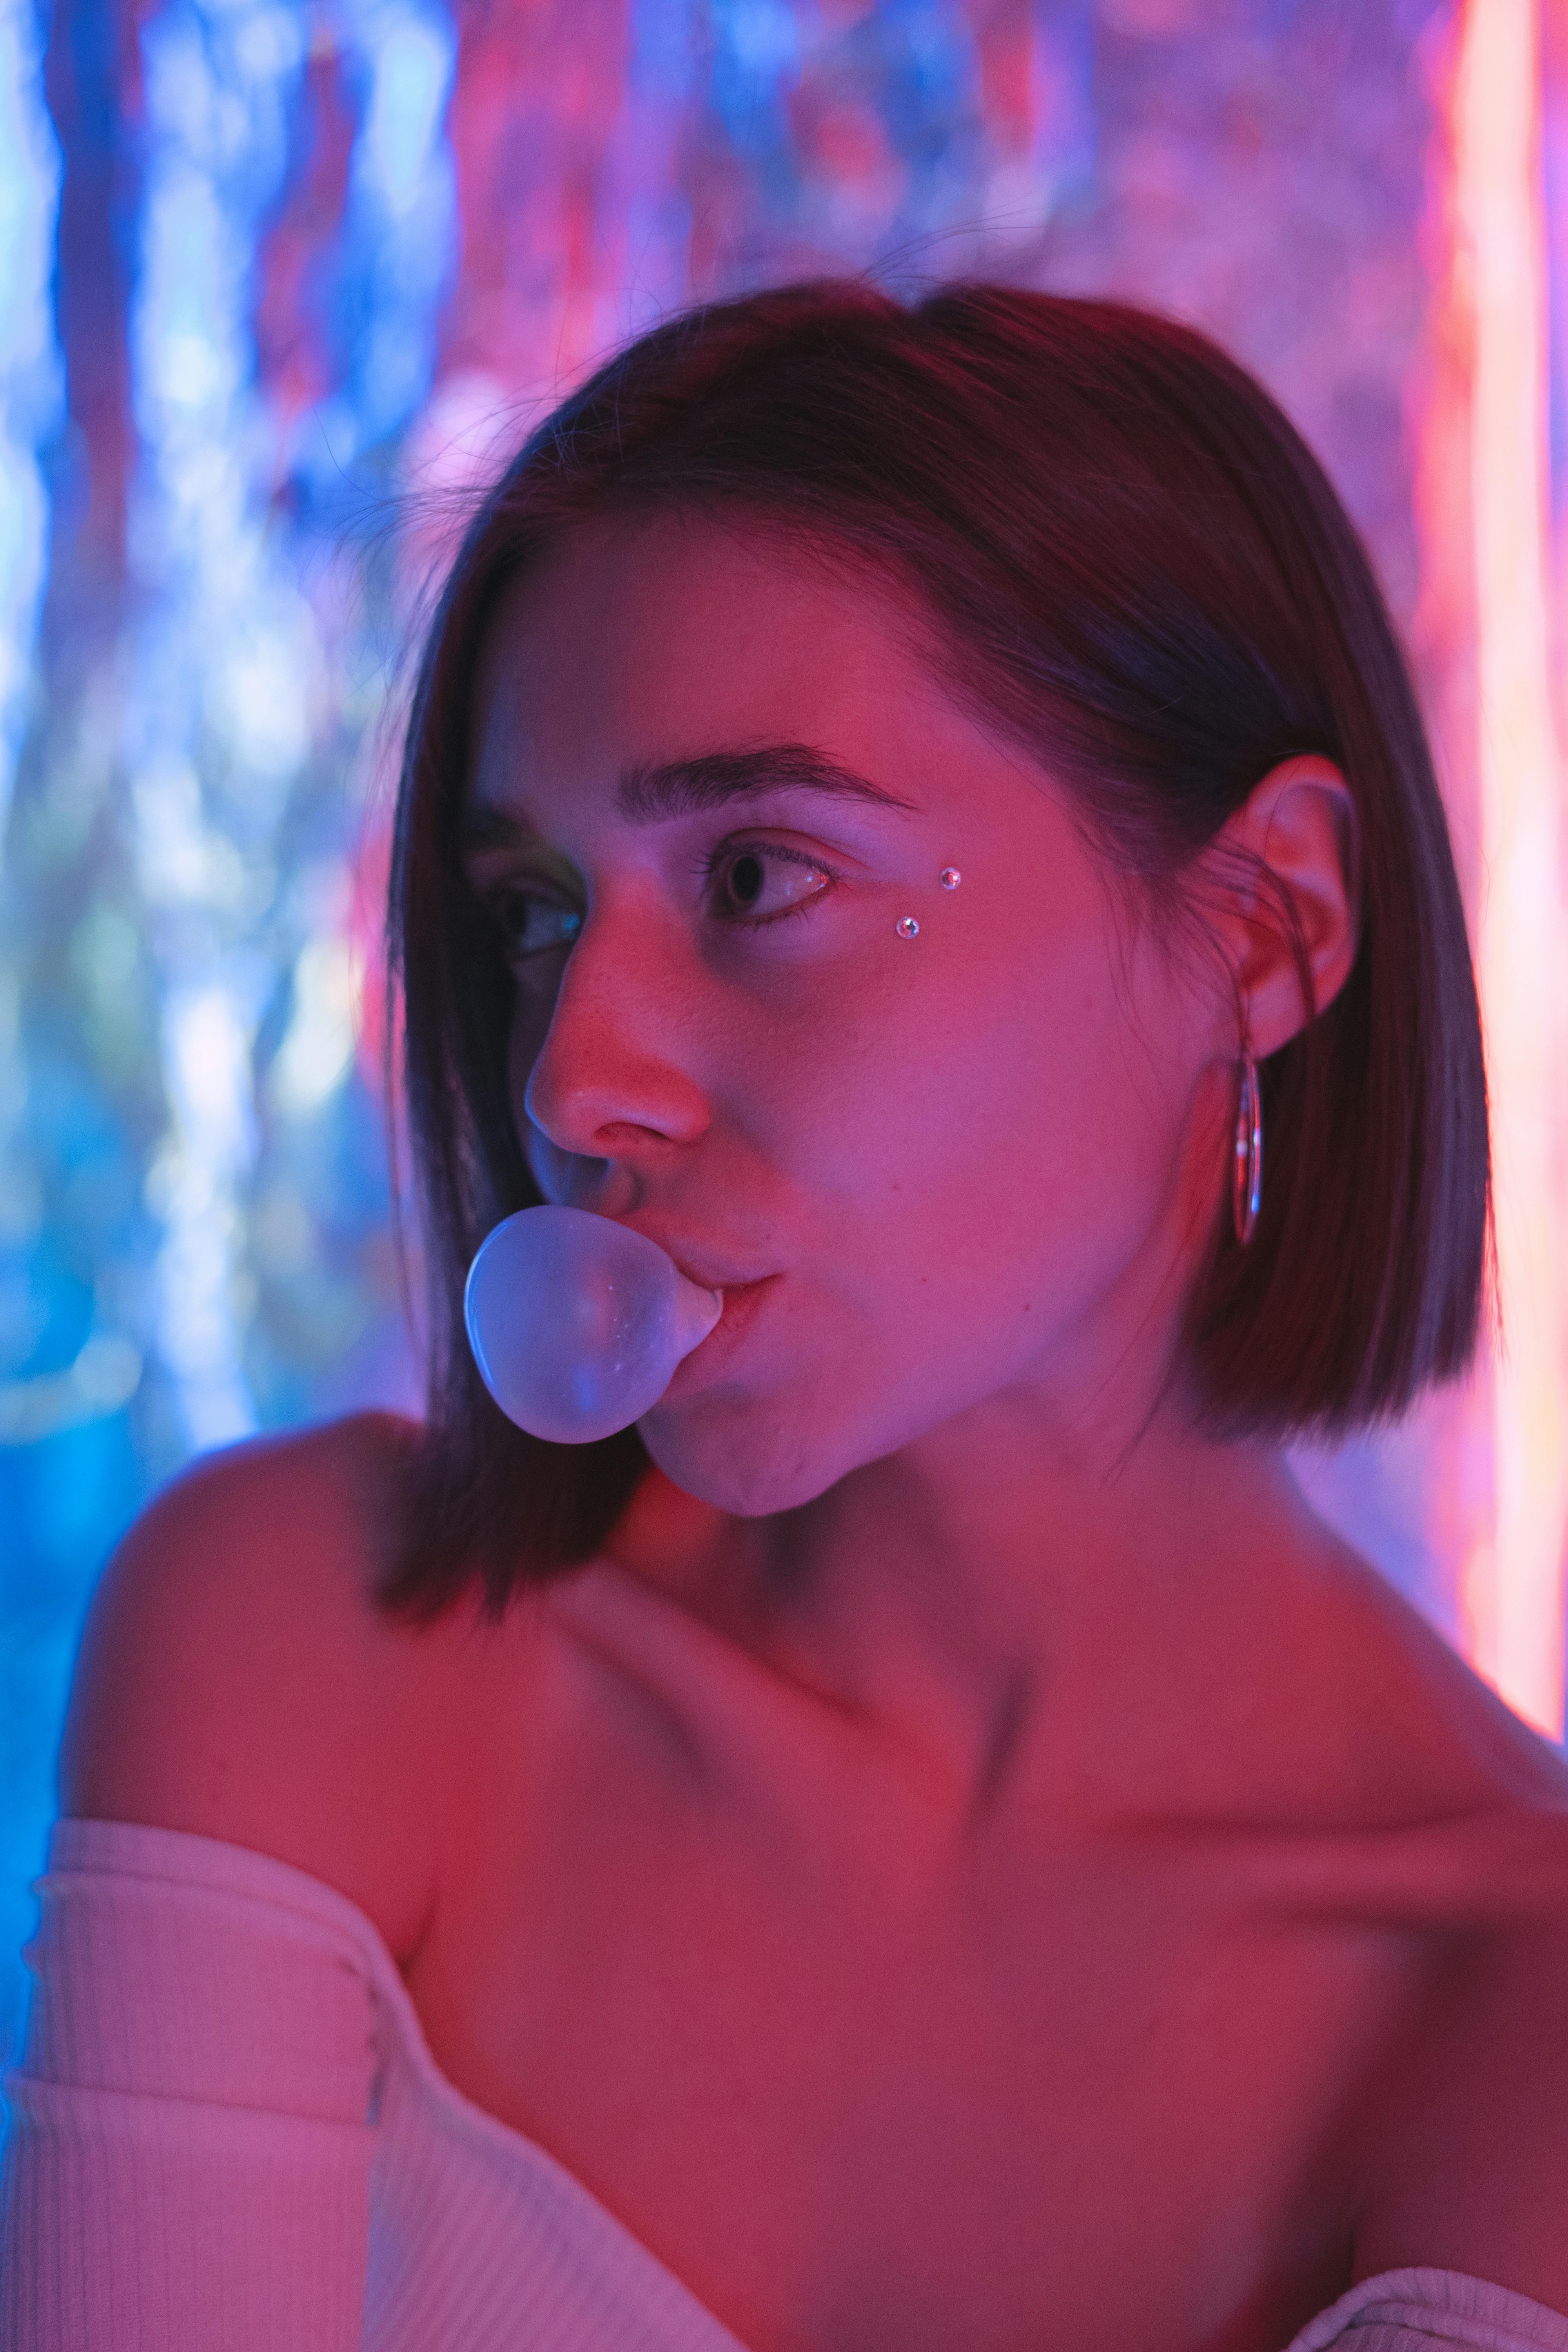 blowing bubble gum photography